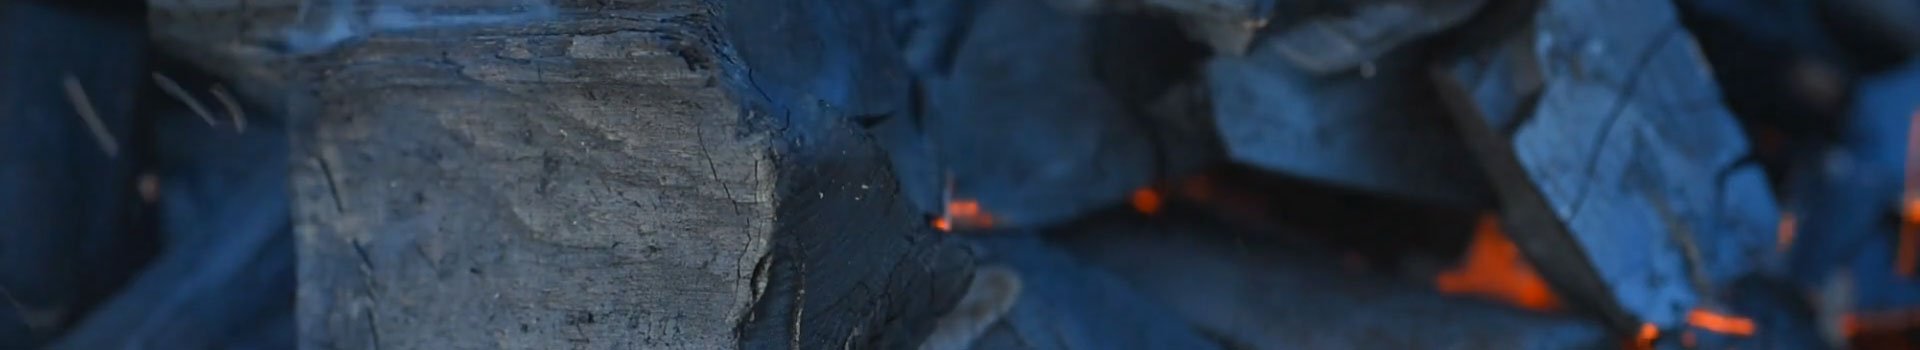 Barbacoas de carbón en Barbecue Portugal